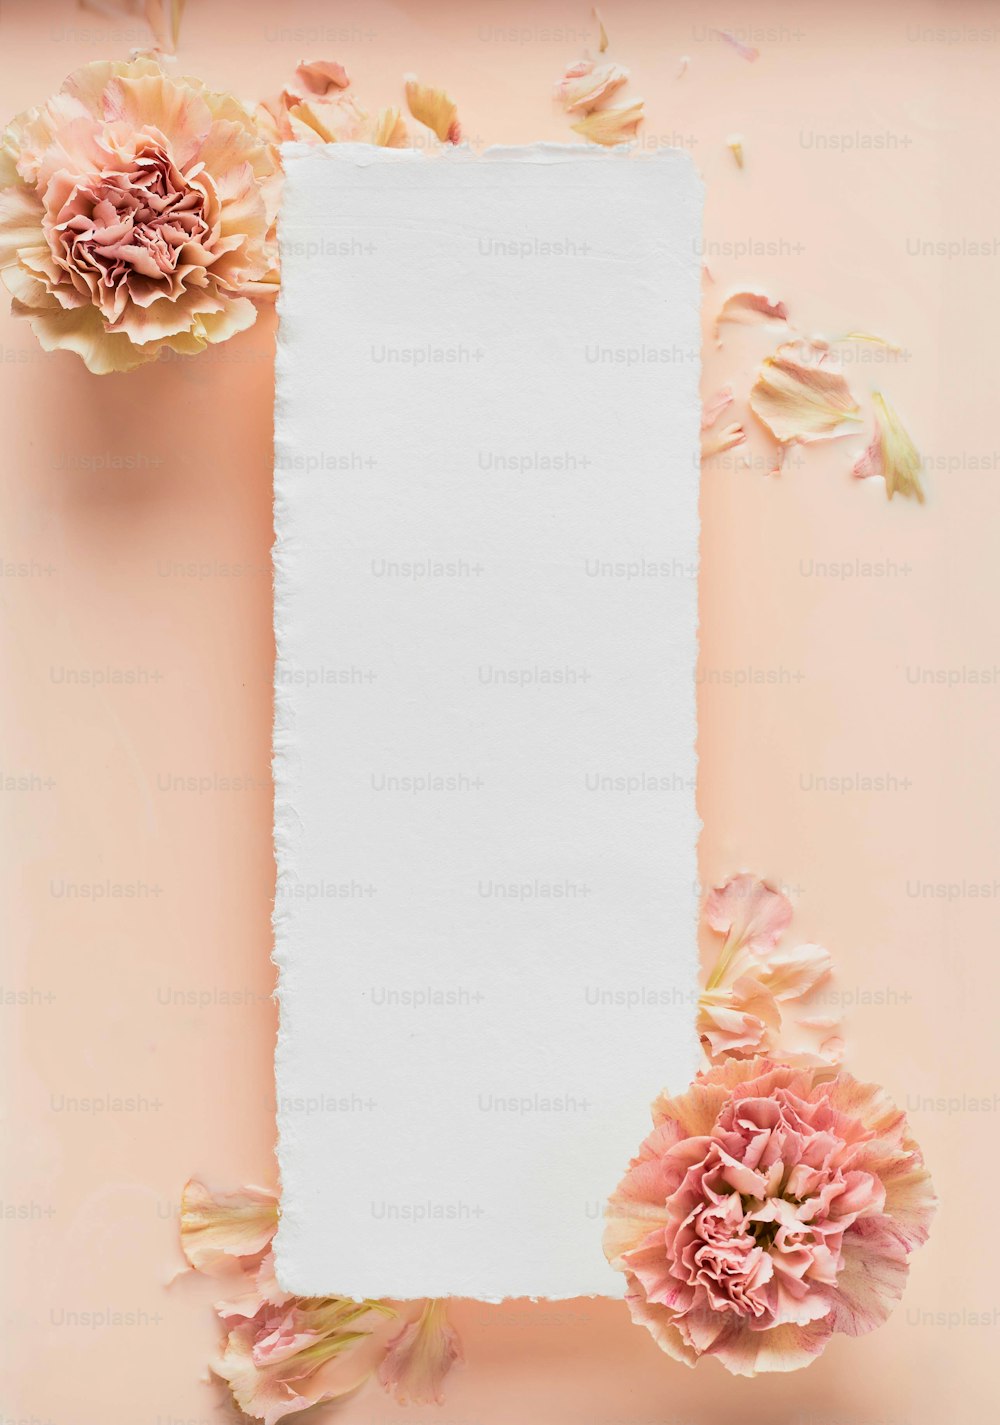 un papel en blanco rodeado de flores sobre un fondo rosa